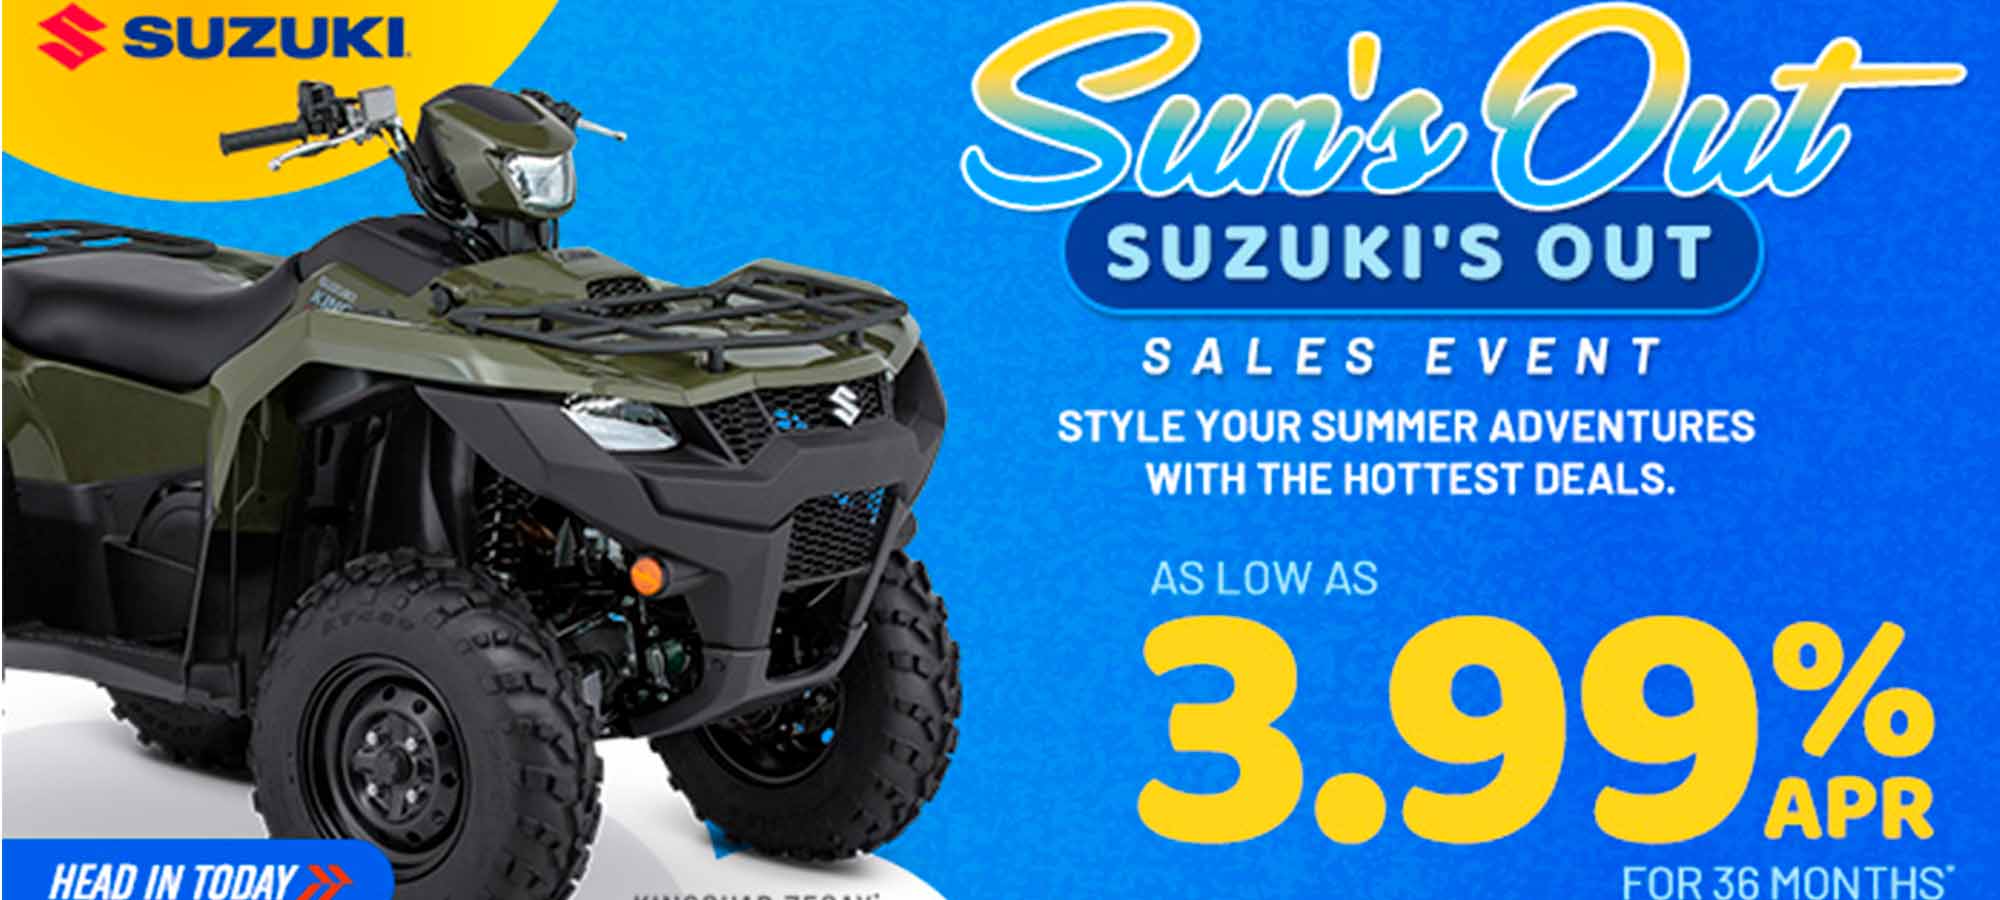 Suzuki US - Sun's Out Suzuki's Out Sales Event at Thornton's Motorcycle - Versailles, IN